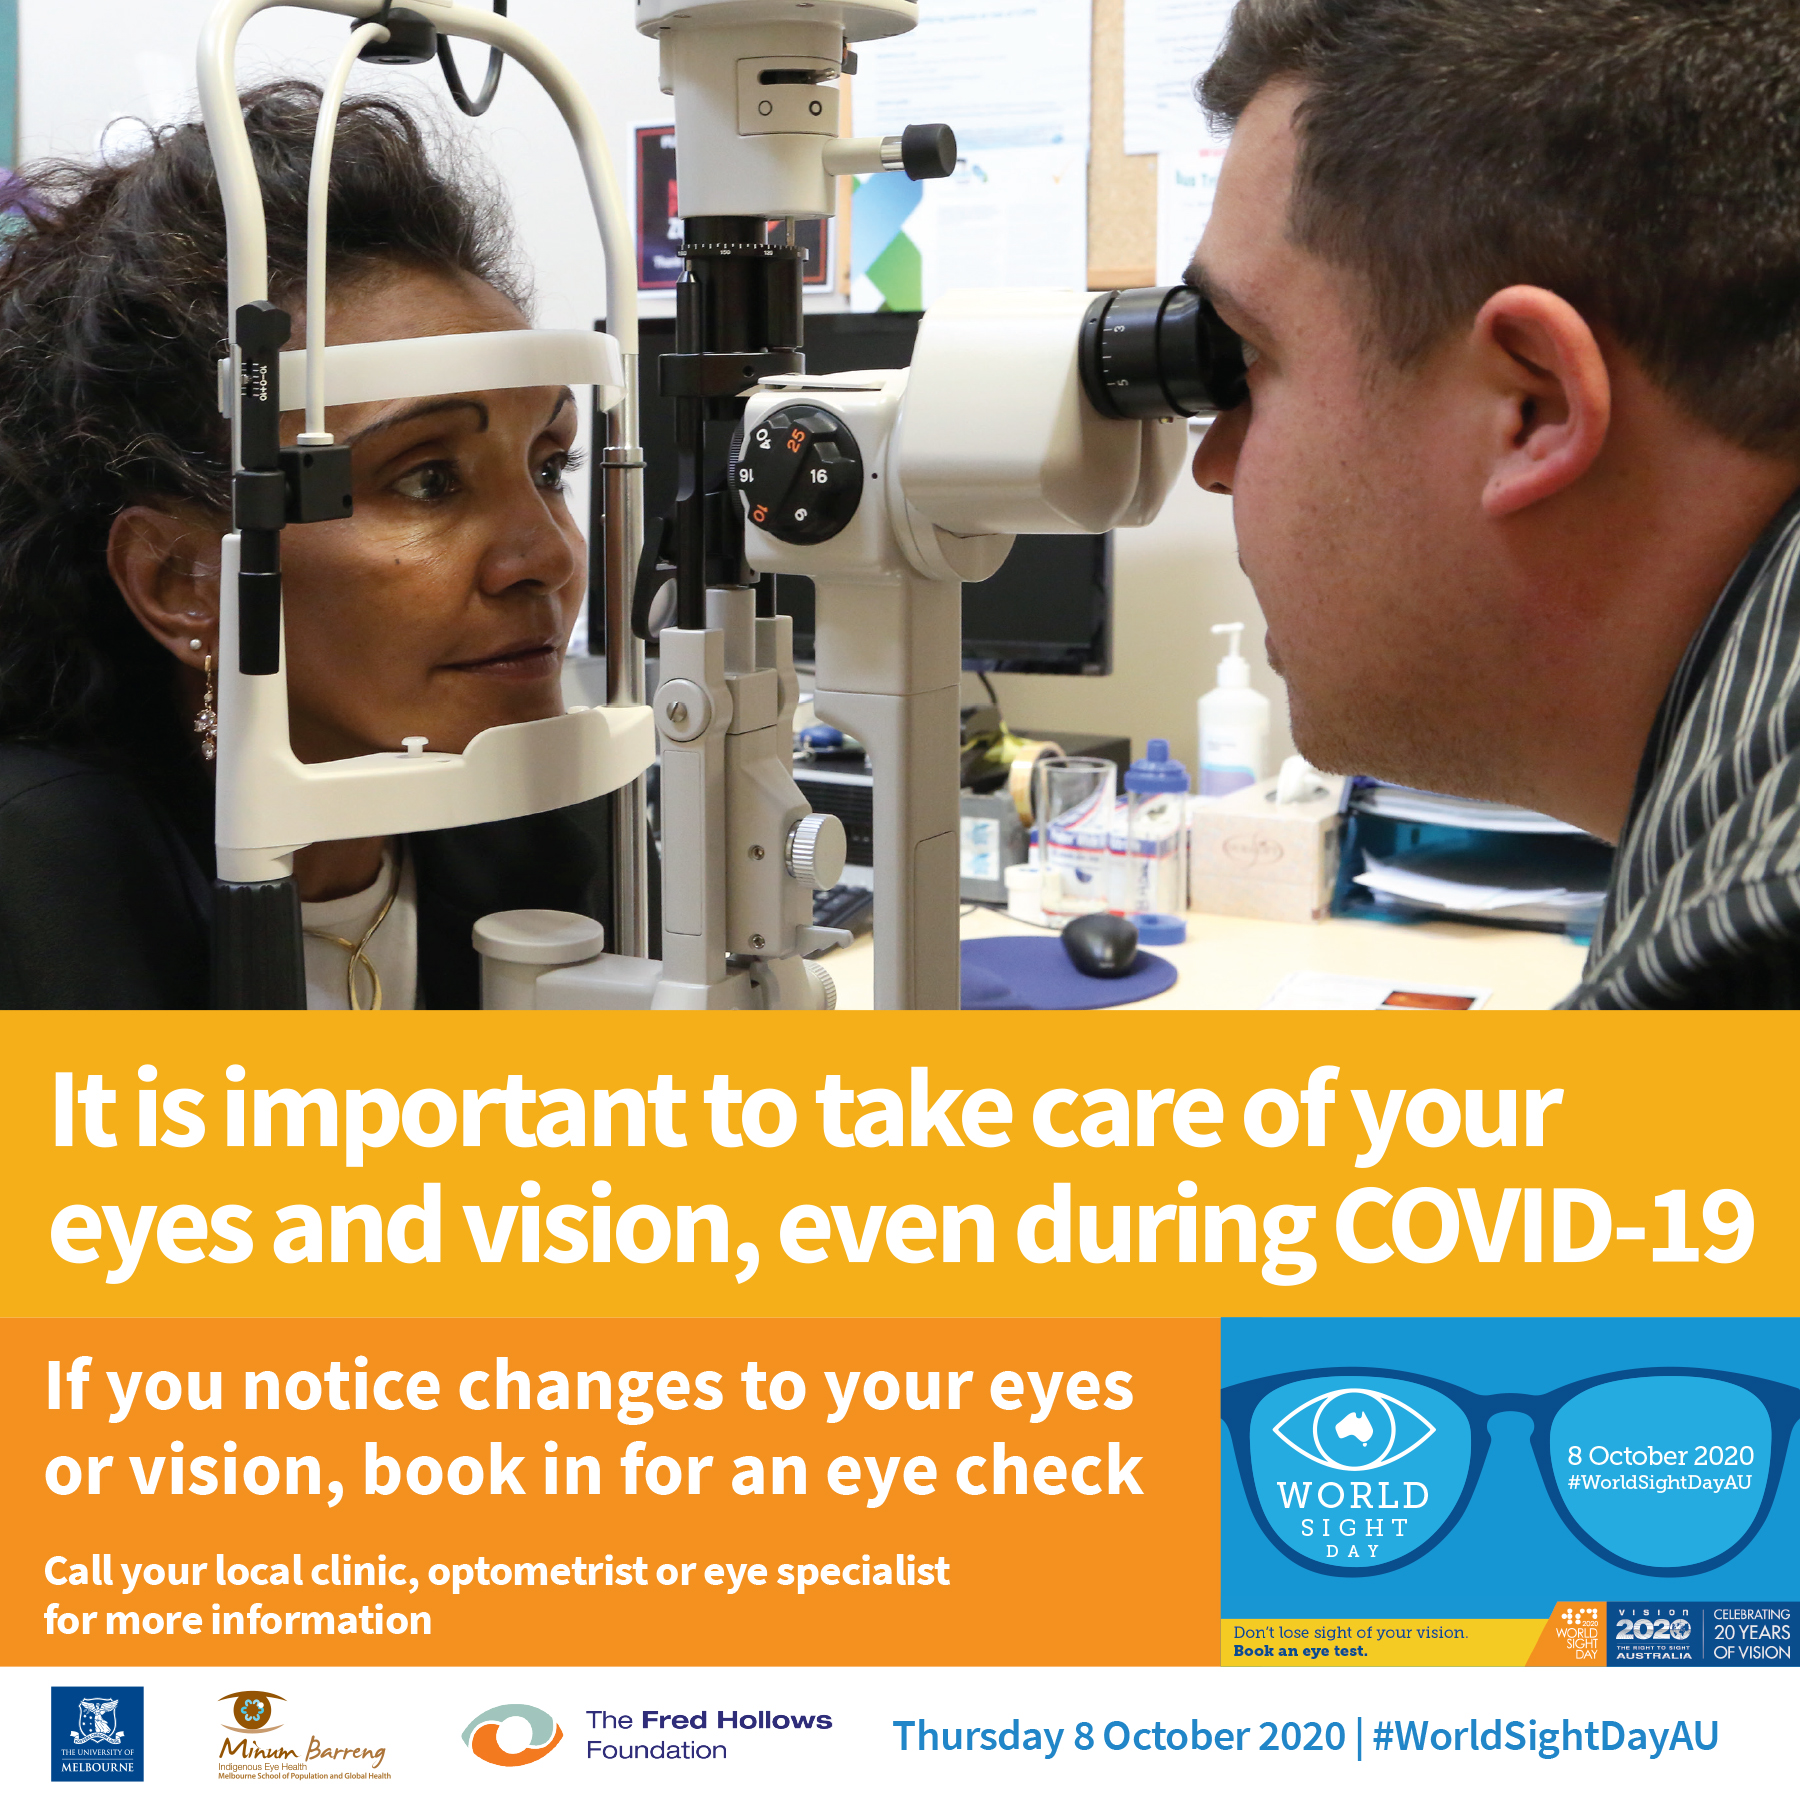 Eye check image promoting world sight day